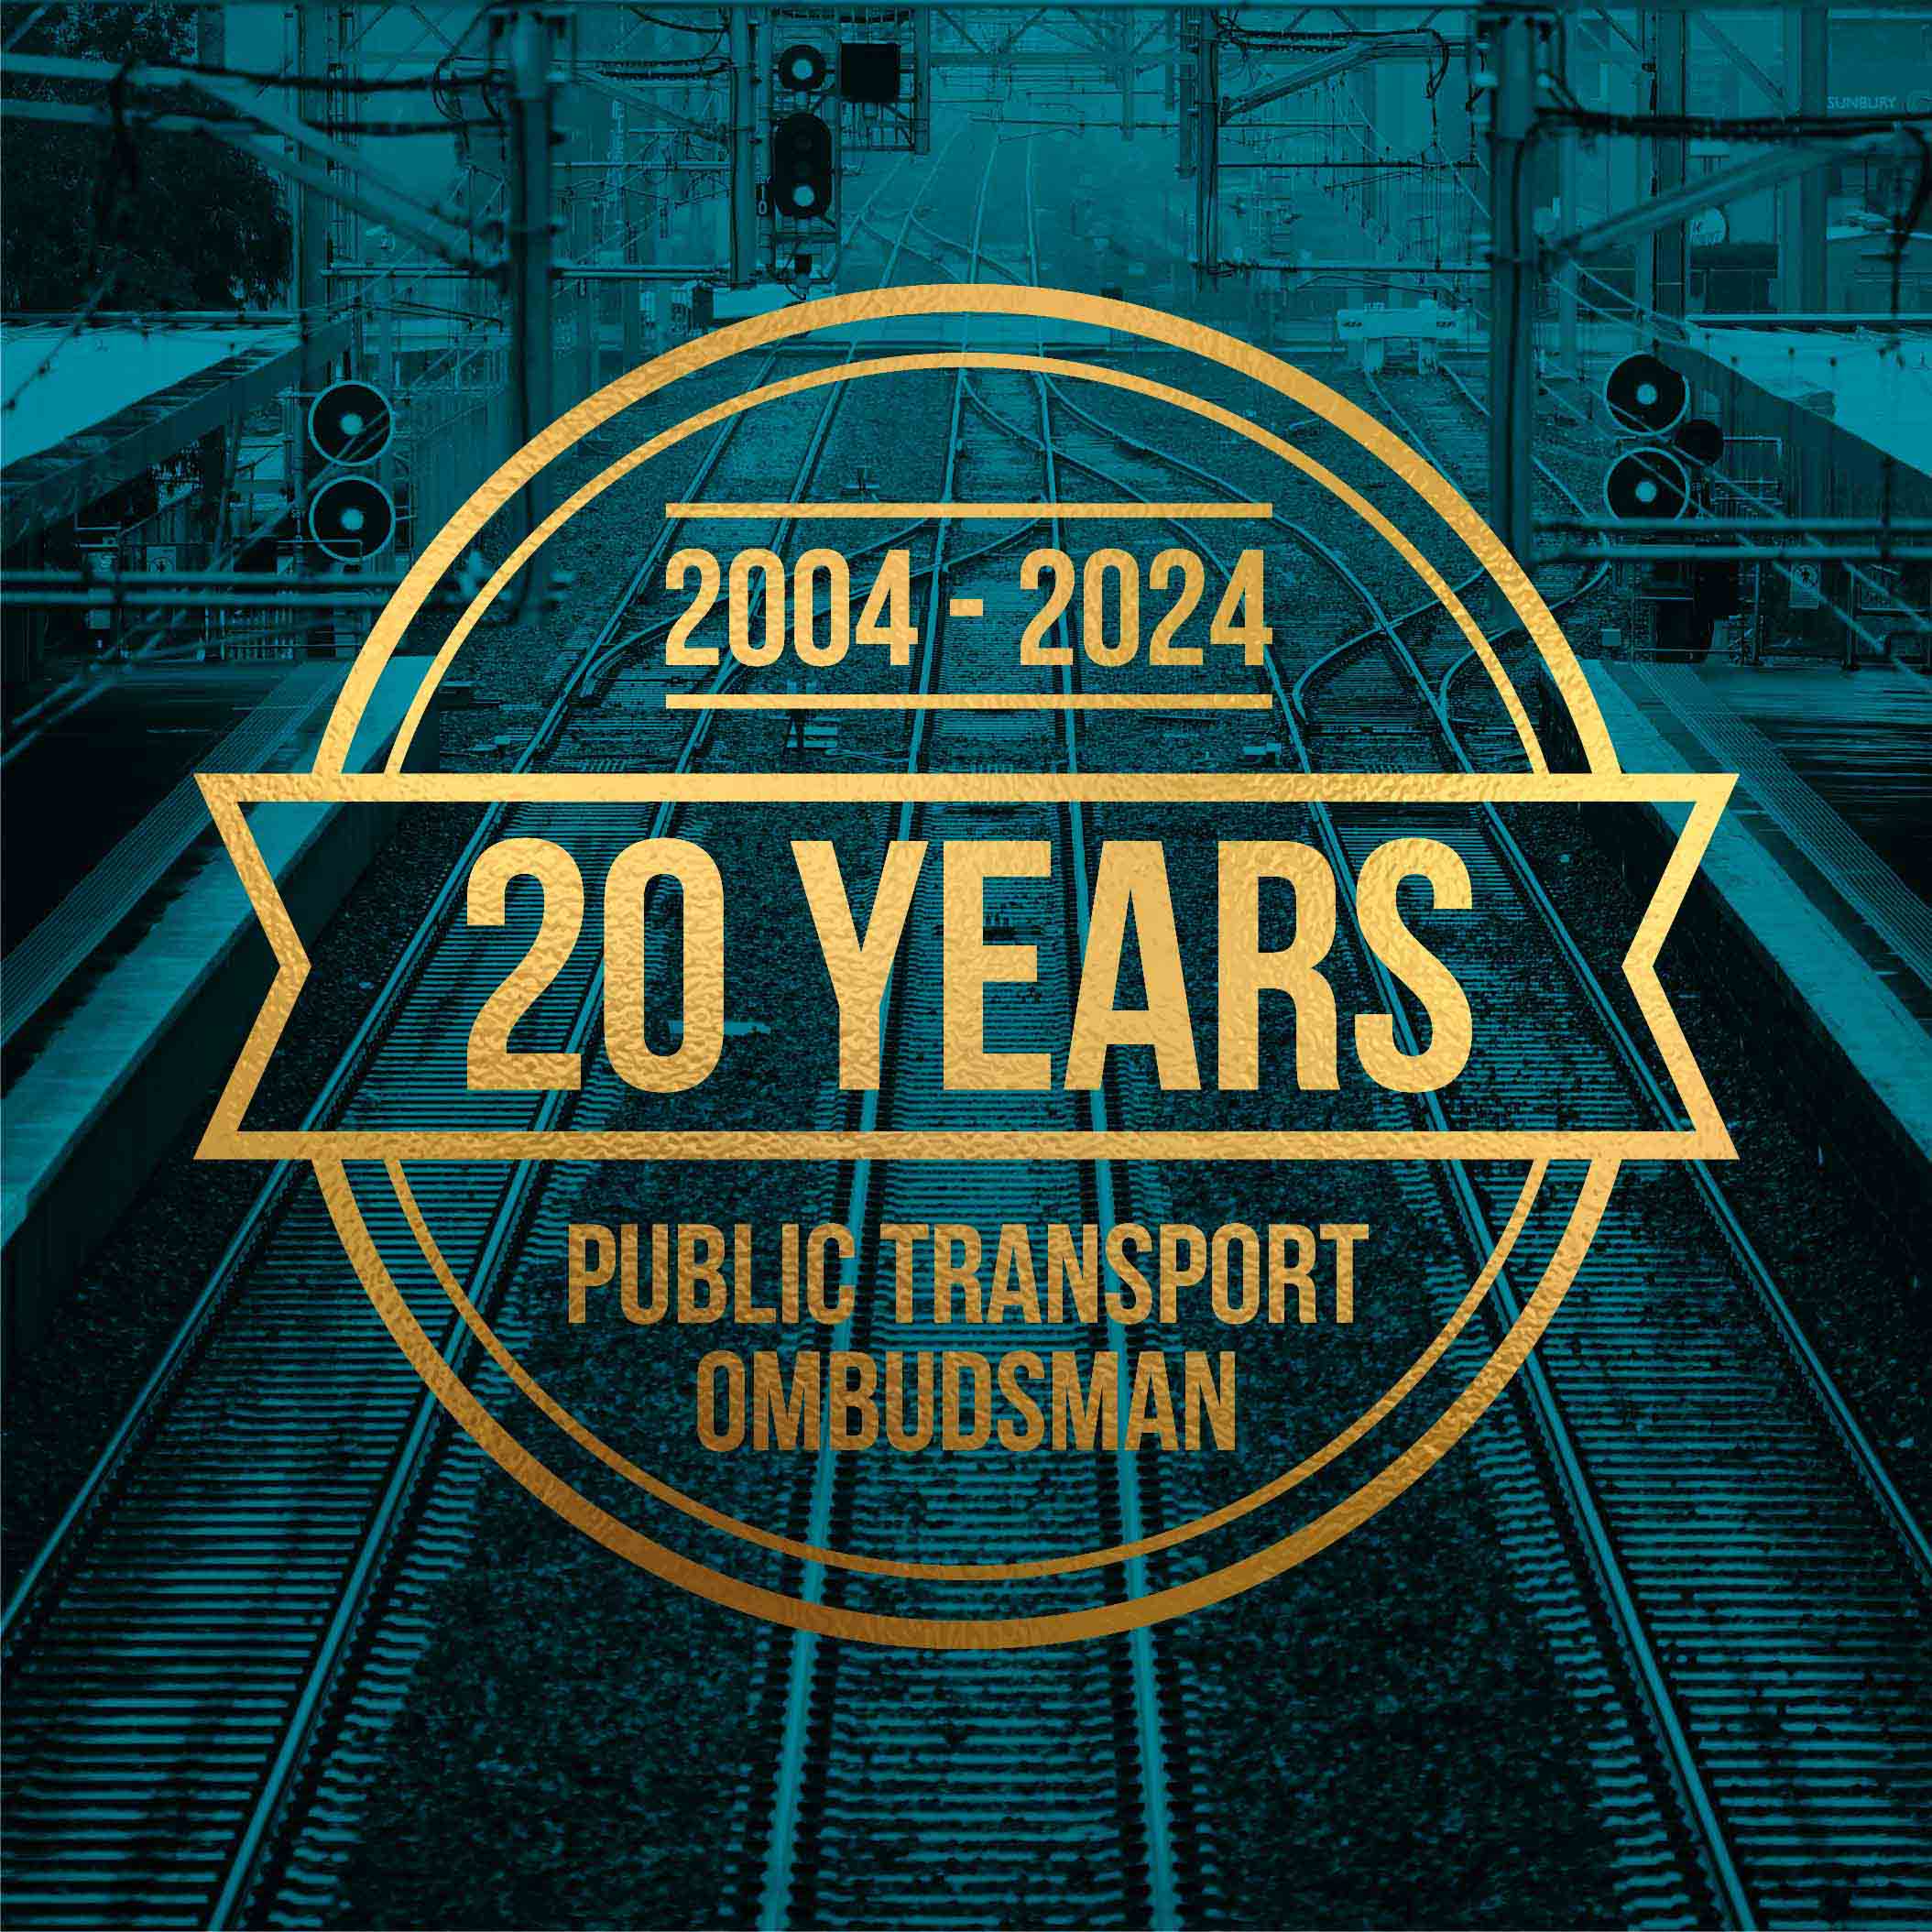 2004-2024, 20 Years Public Transport Ombudsman